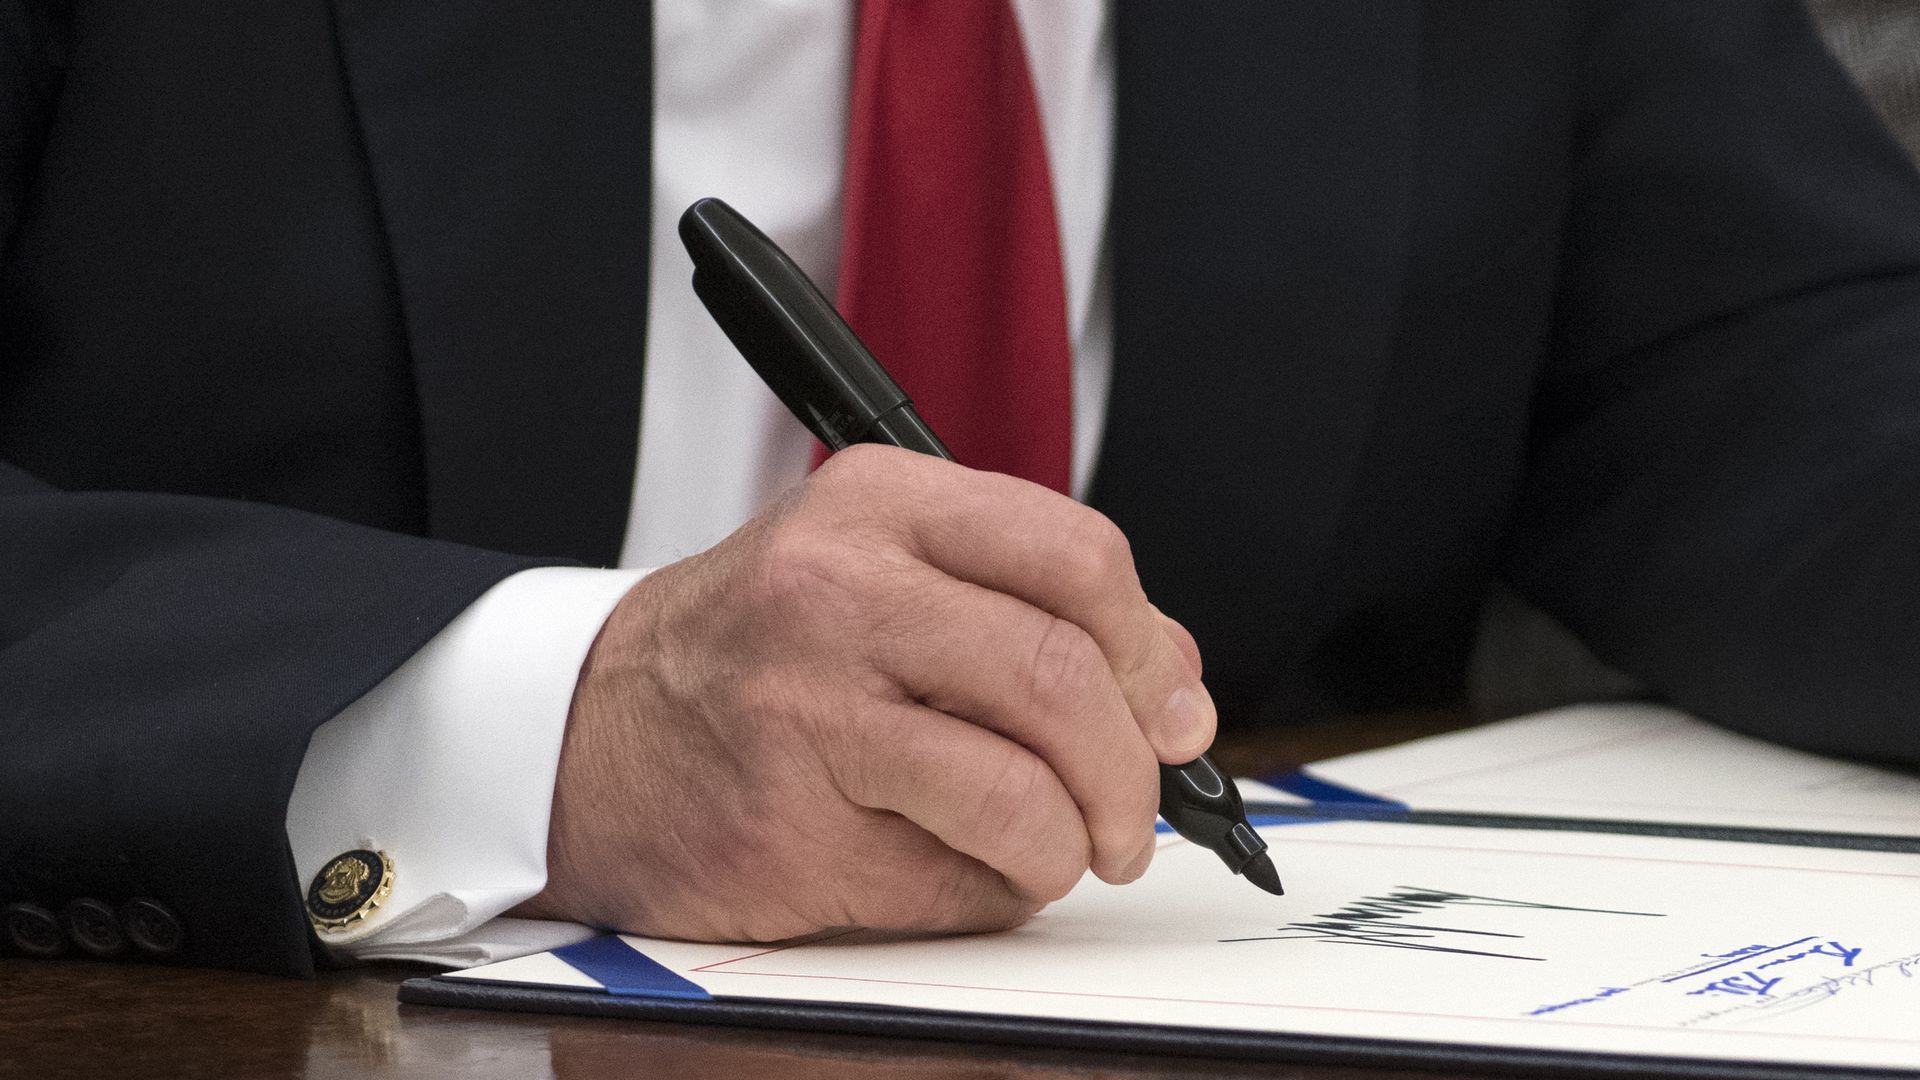 Trump signing an opioid bill